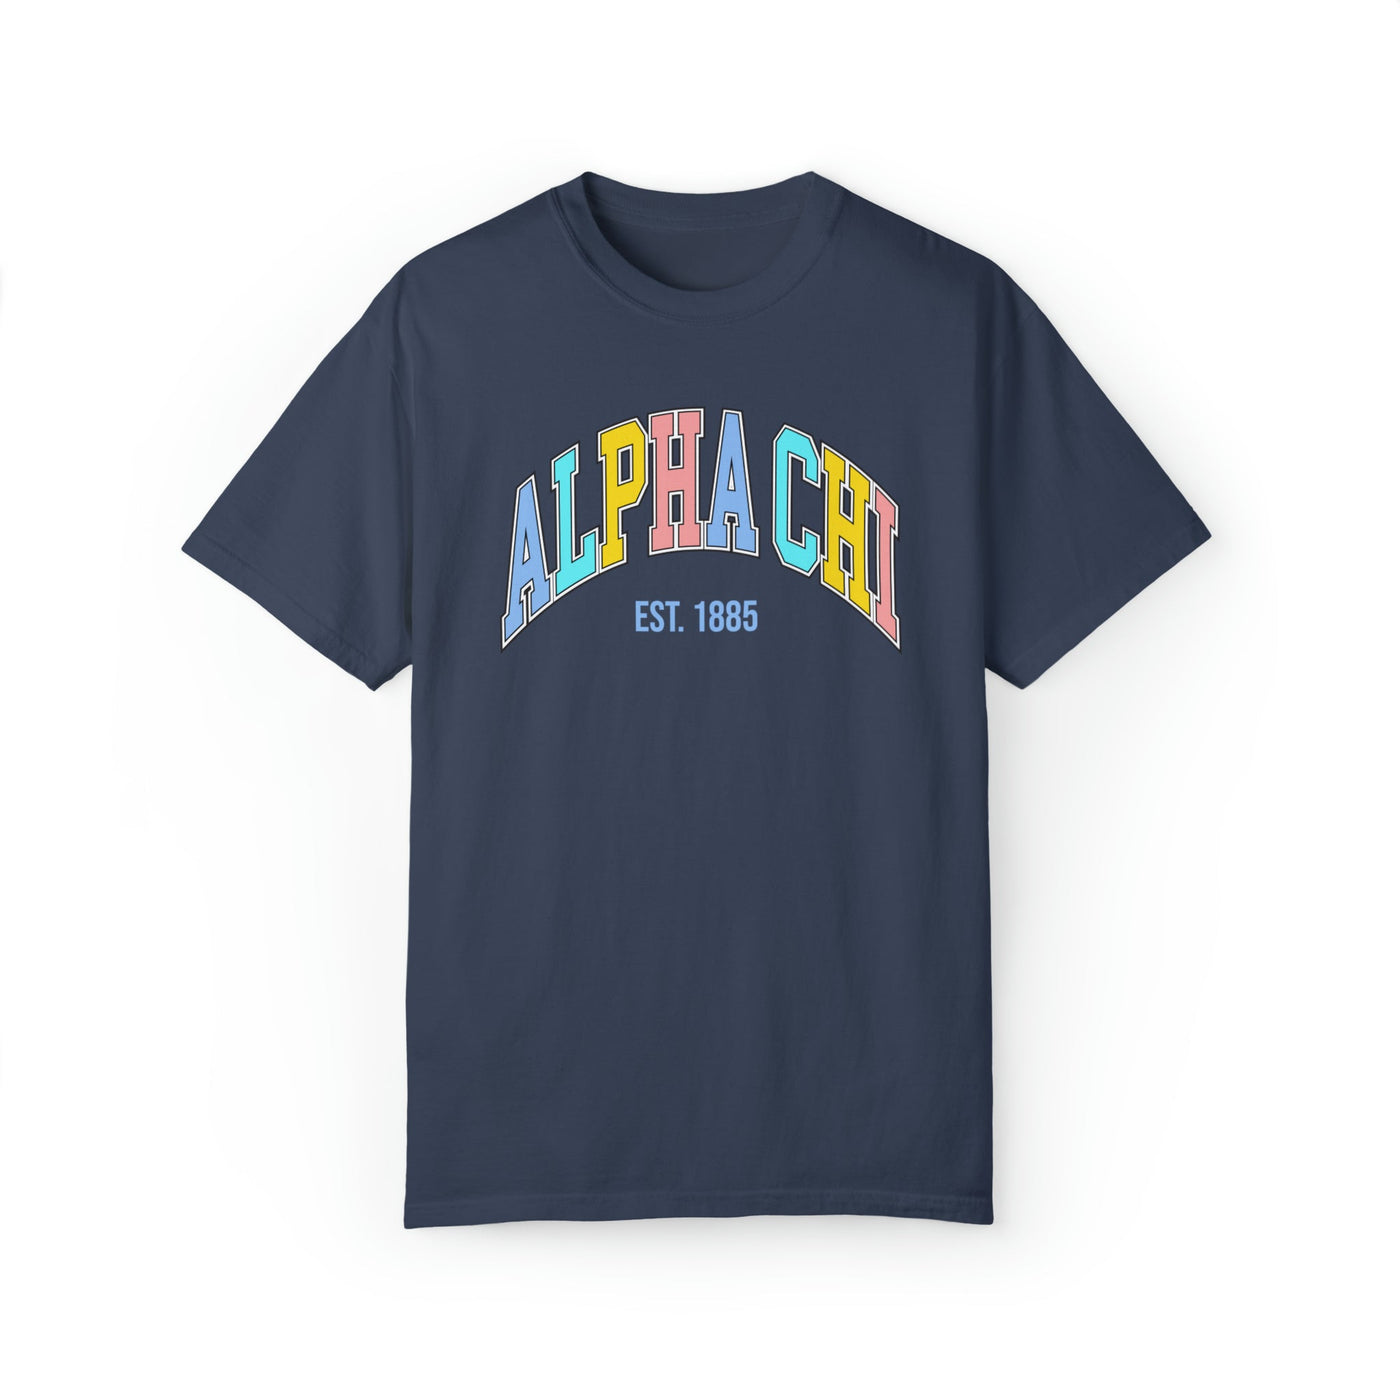 Alpha Chi Omega Pastel Varsity Sorority T-shirt